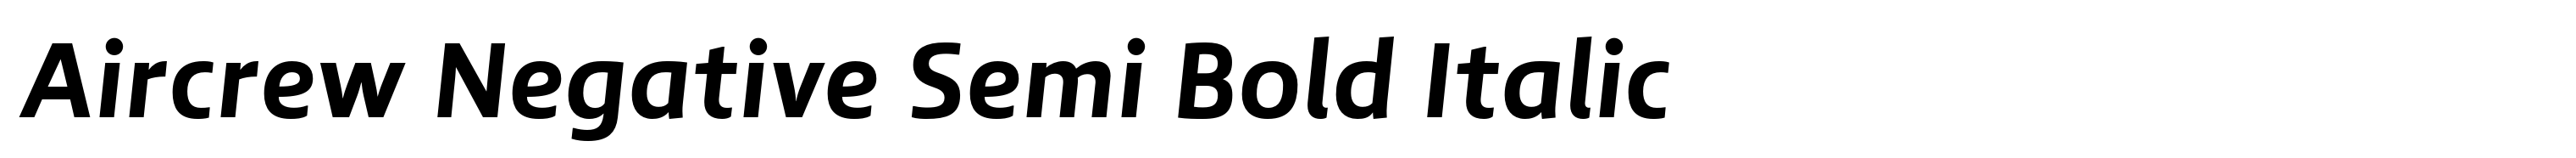 Aircrew Negative Semi Bold Italic